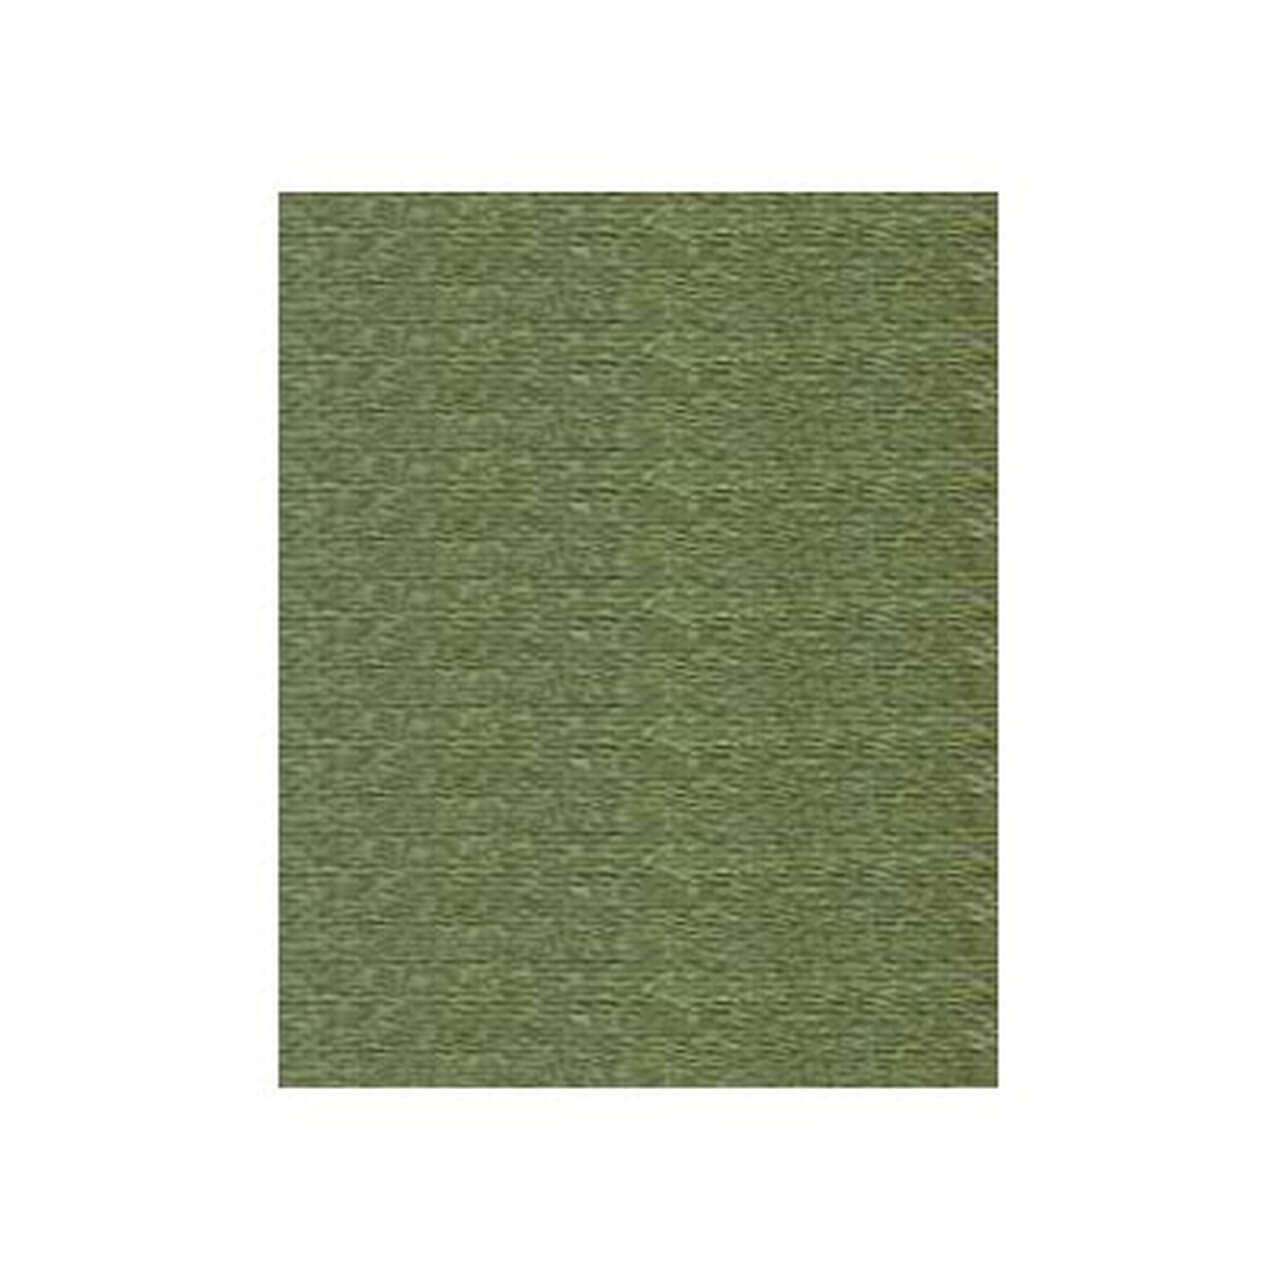 Madeira Polyneon 1701 Spring Green Embroidery Thread 5500 Yards